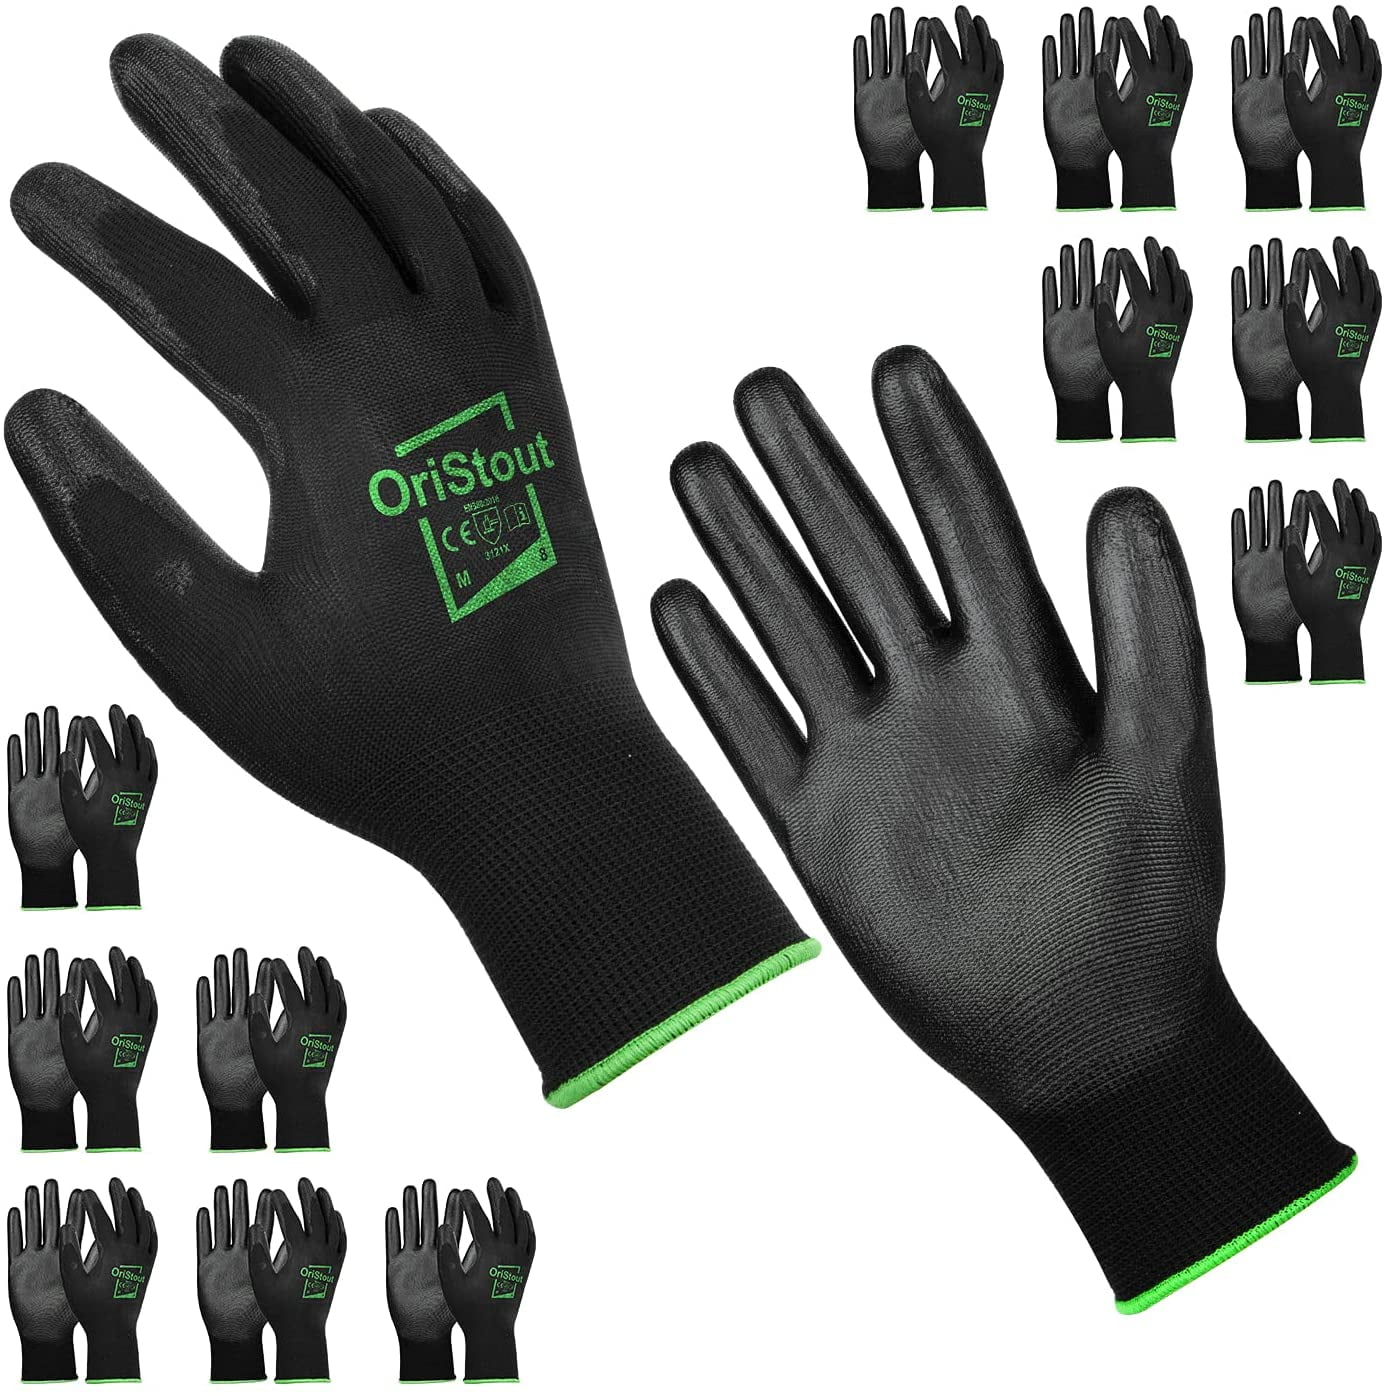 OriStout Level 6 Cut Resistant Lightweight Work Gloves Black 1pc | toolant